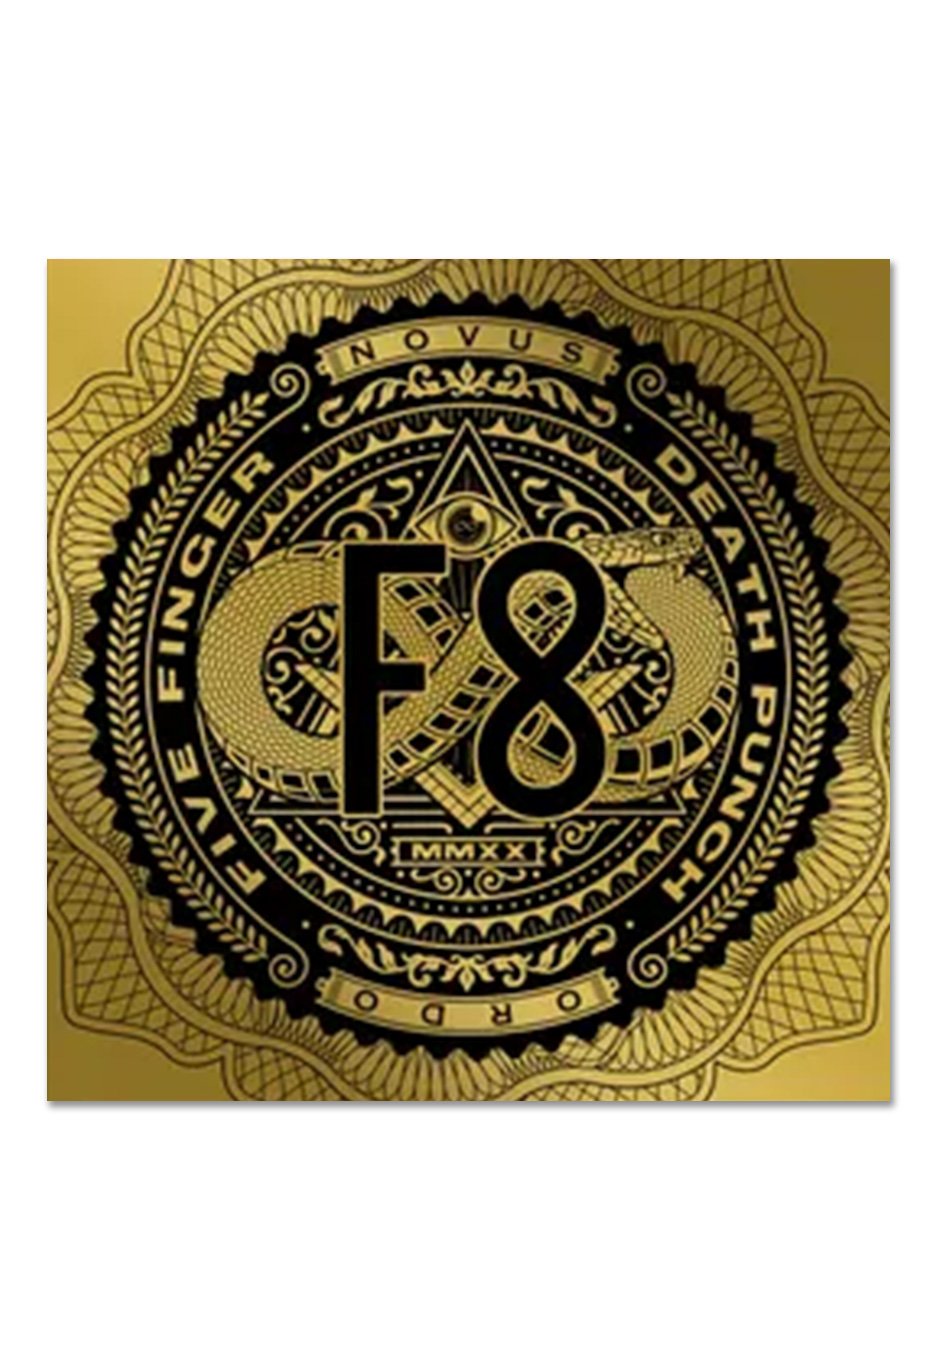 Five Finger Death Punch - F8 Ltd. Gold - Colored 2 Vinyl